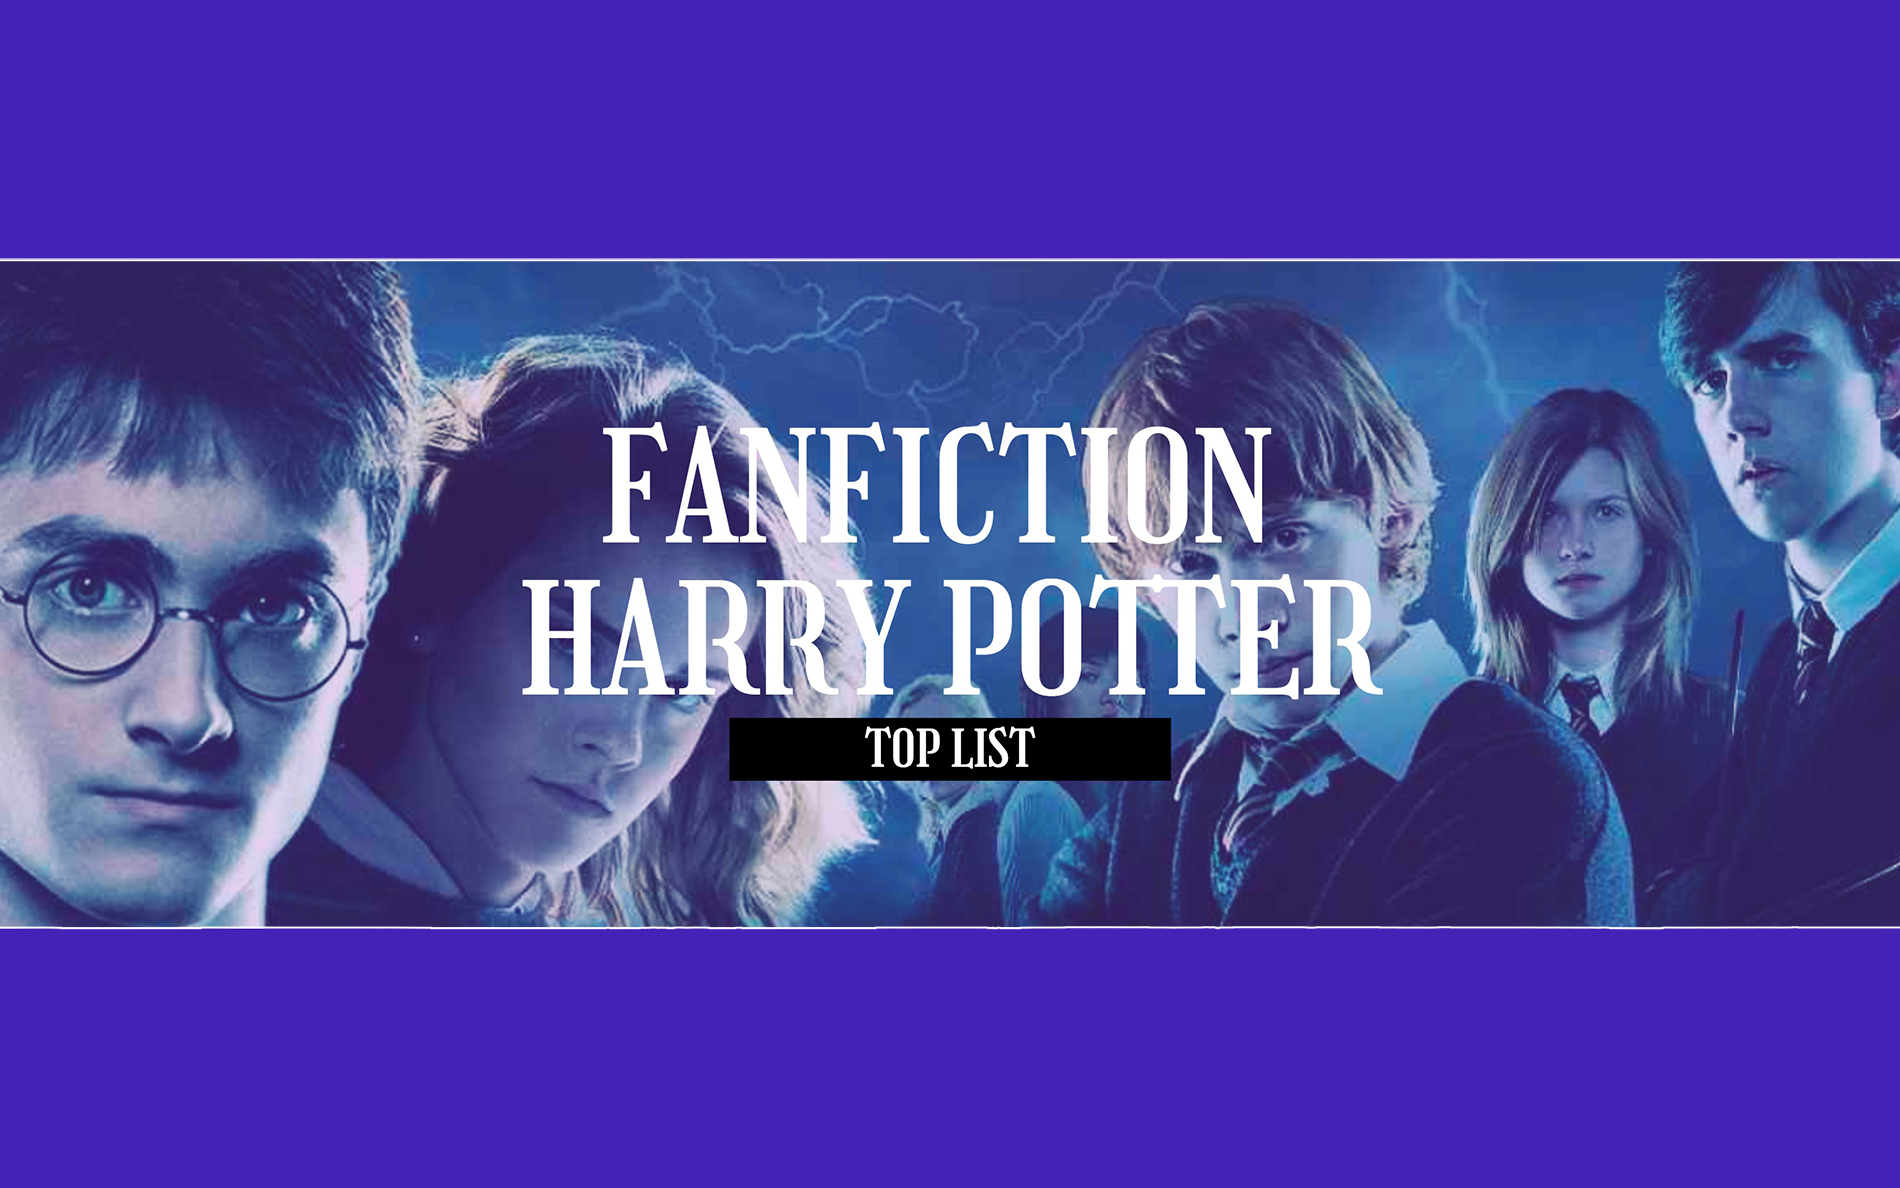 Harry potter fanfiction harry is immune to veela allure